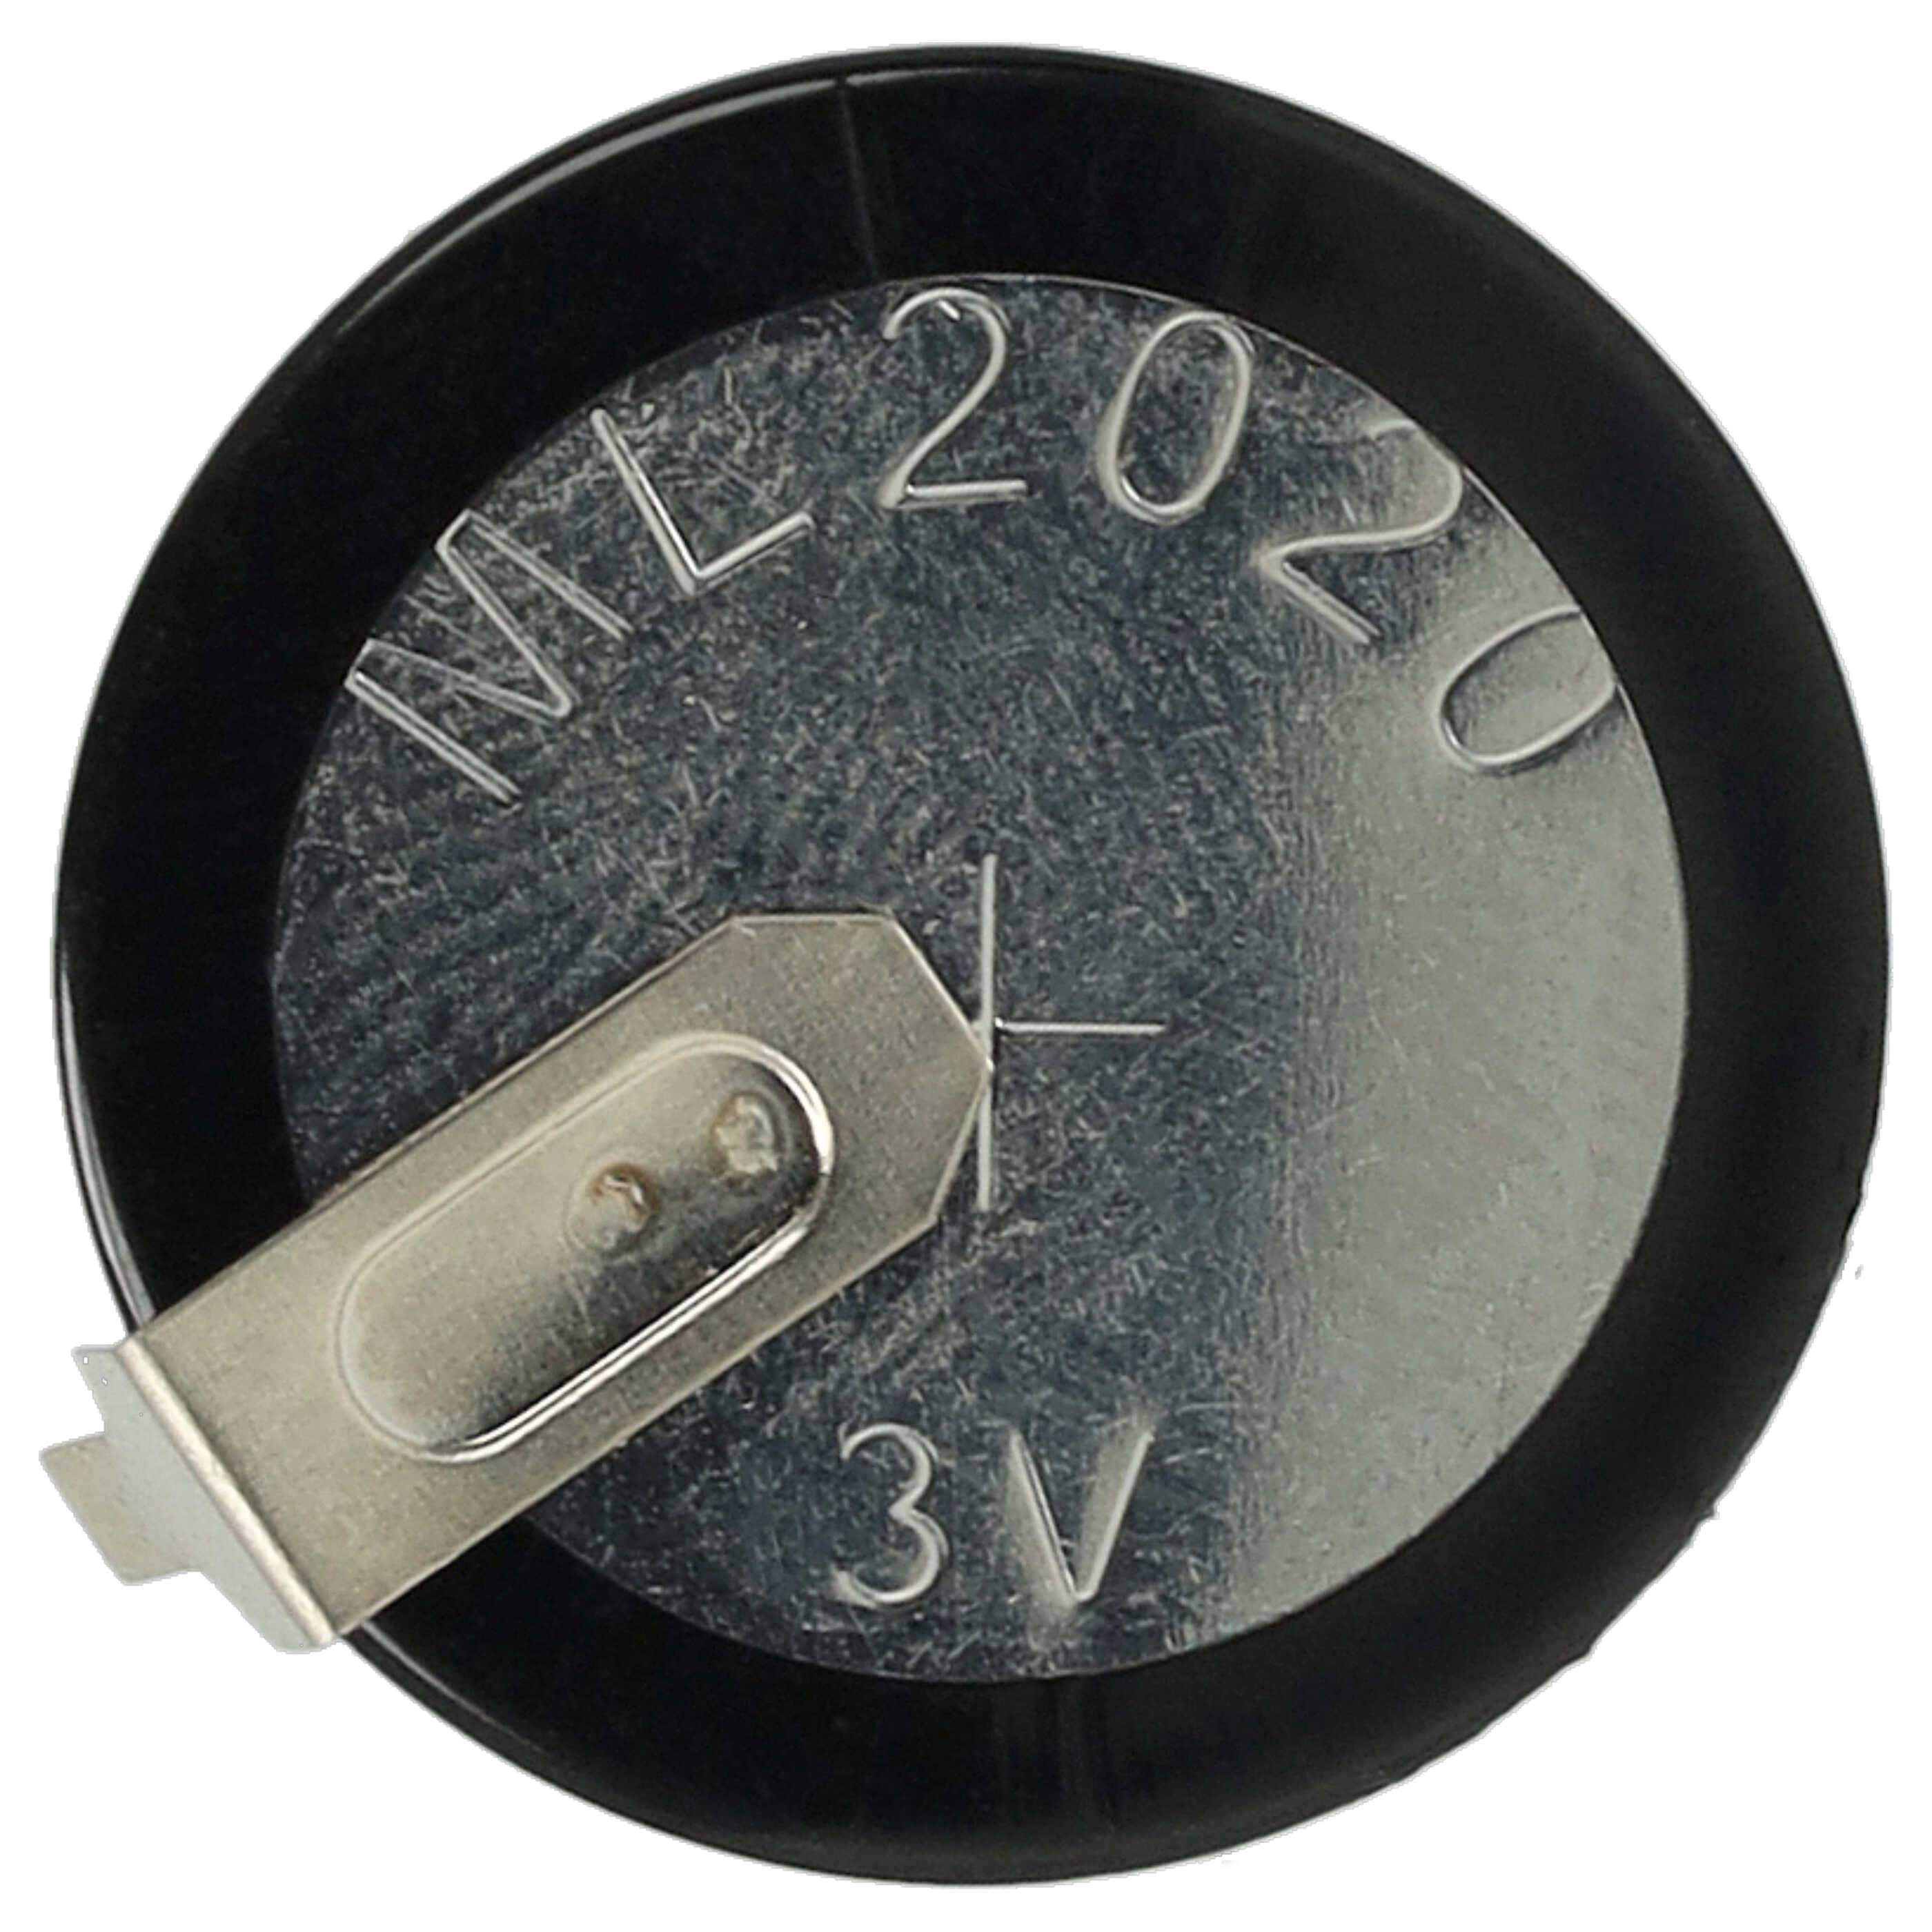 2x Akumulator do kluczyka samochodowego zamiennik VL2020, VL2025, LIR2025 - 20 mAh 3,6 V Li-Ion